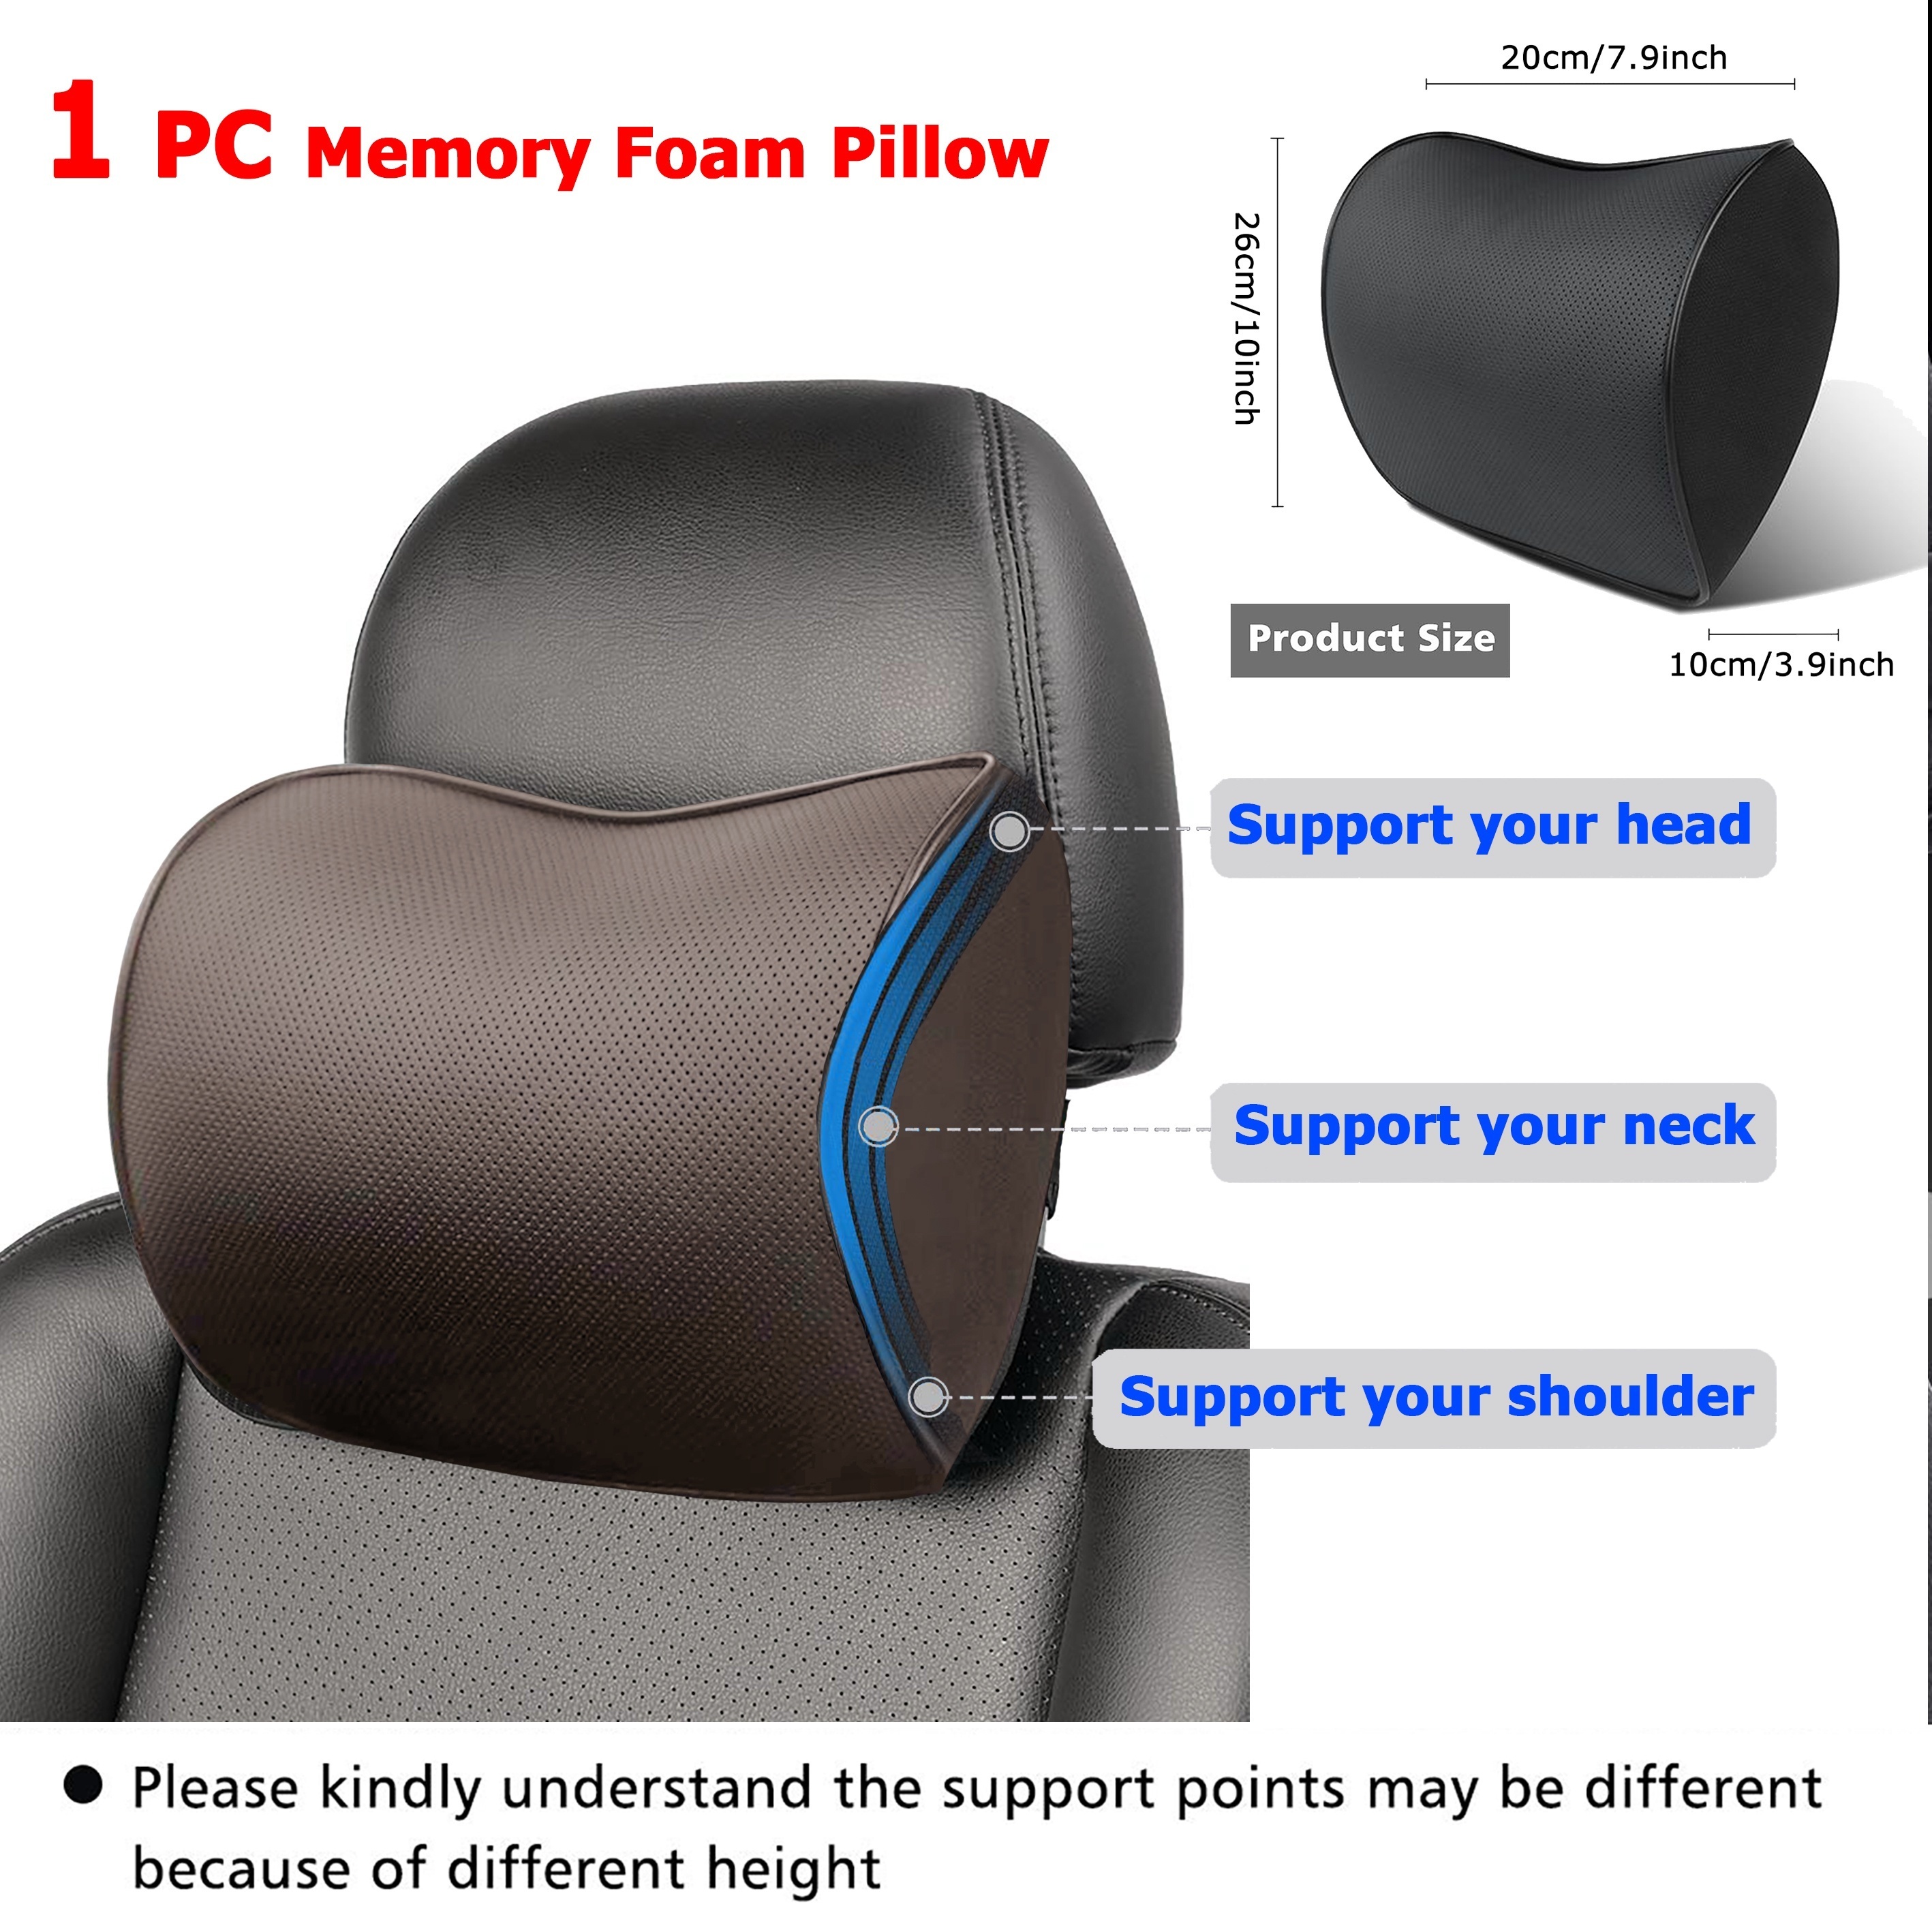 2 PC Neck Rest Pillow Headrest Adjustable Strap Driving Home Office Relieve Pain